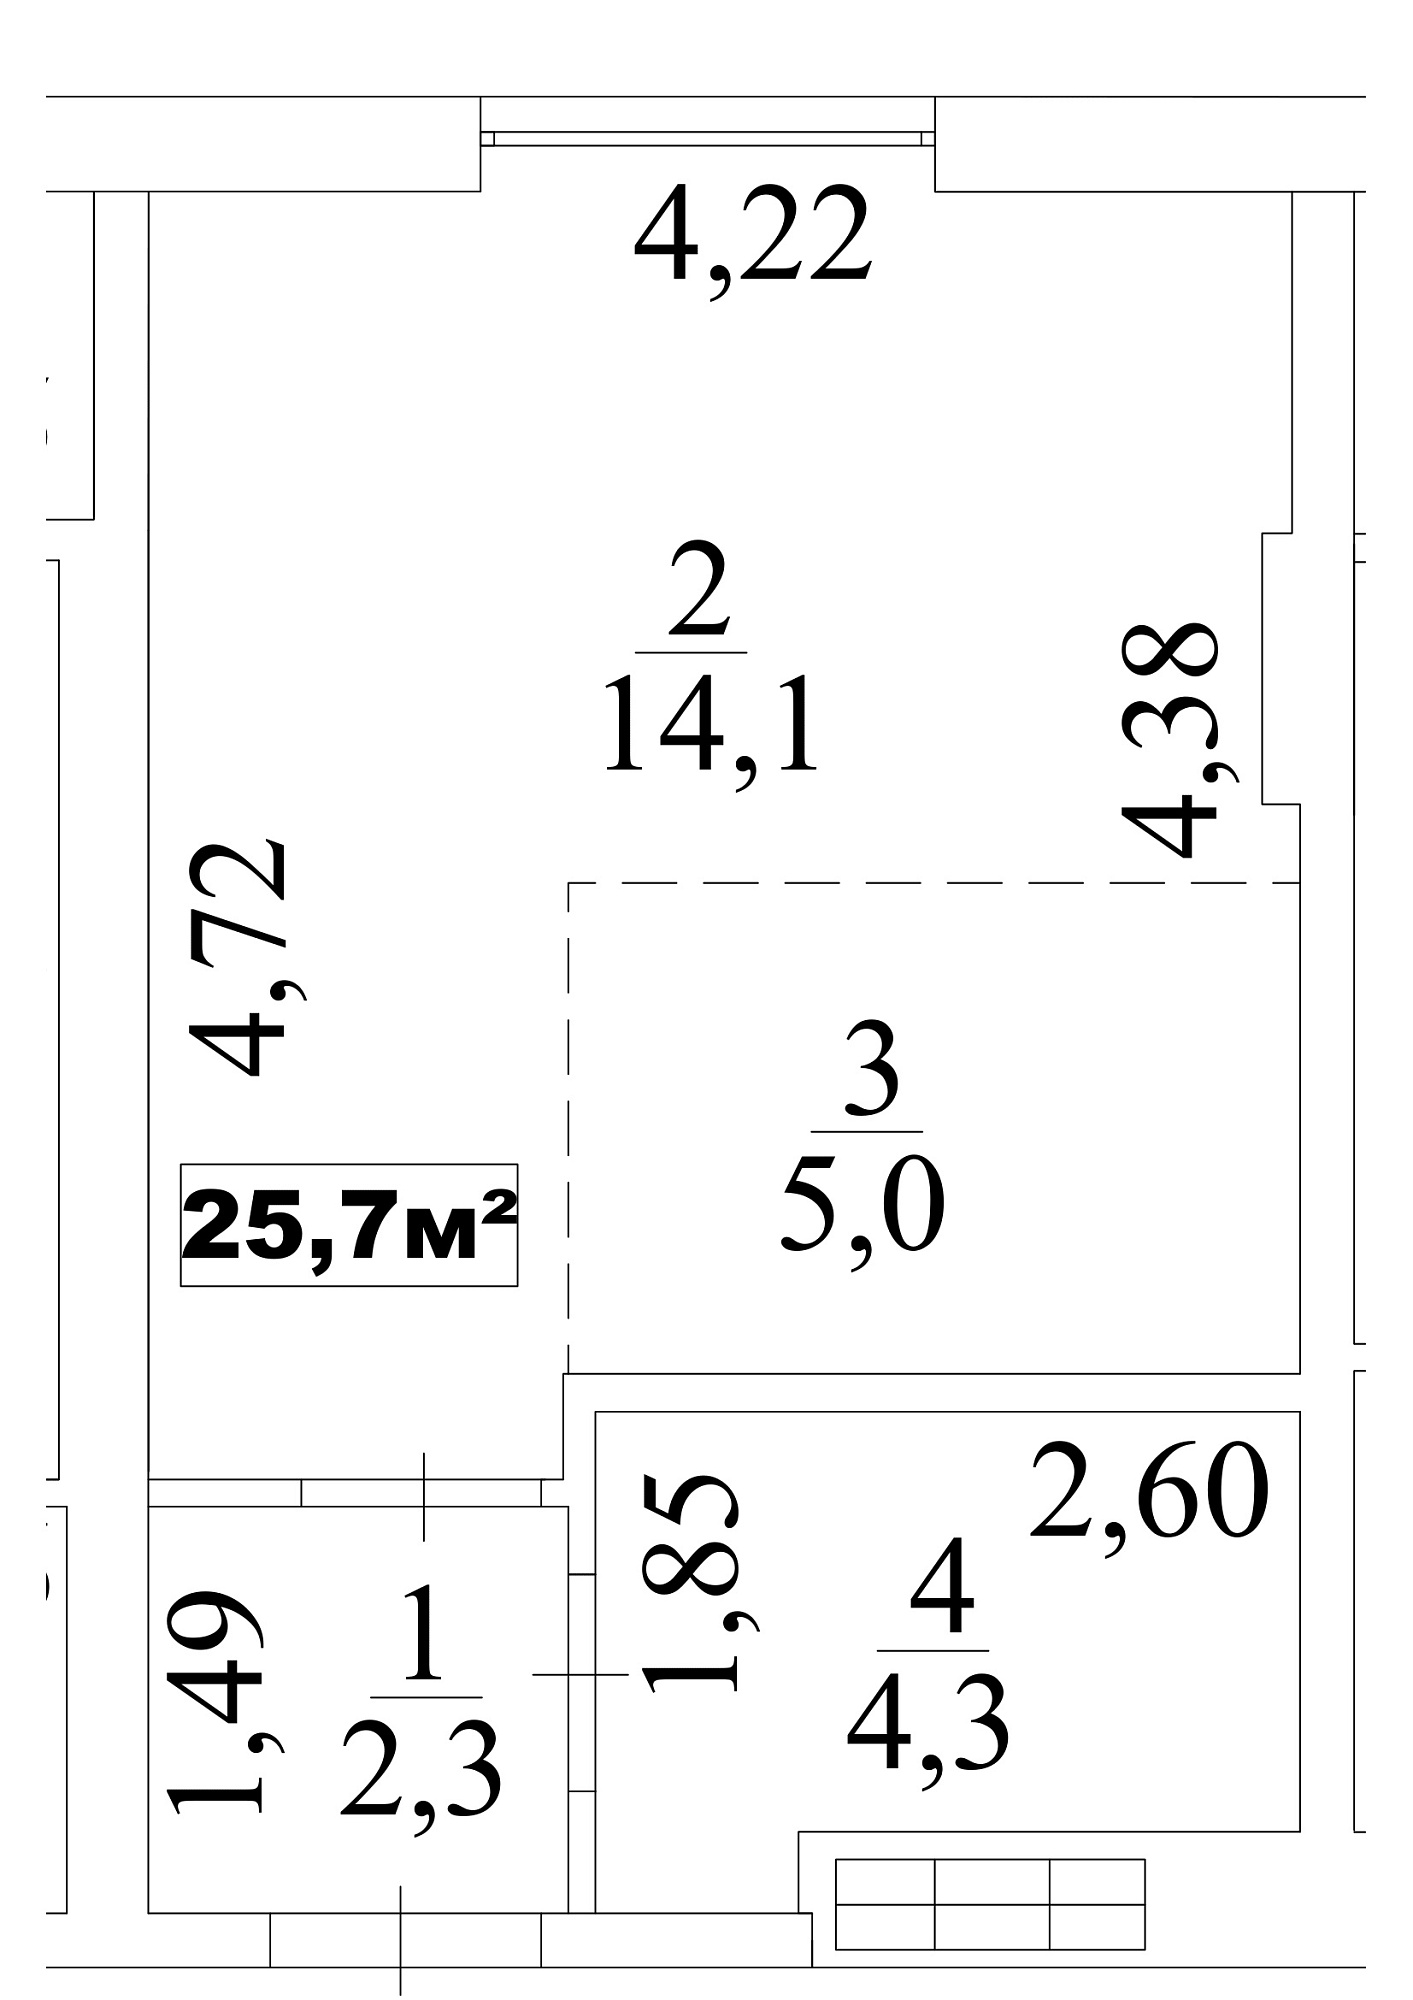 Планировка Smart-квартира площей 25.7м2, AB-10-06/0048в.